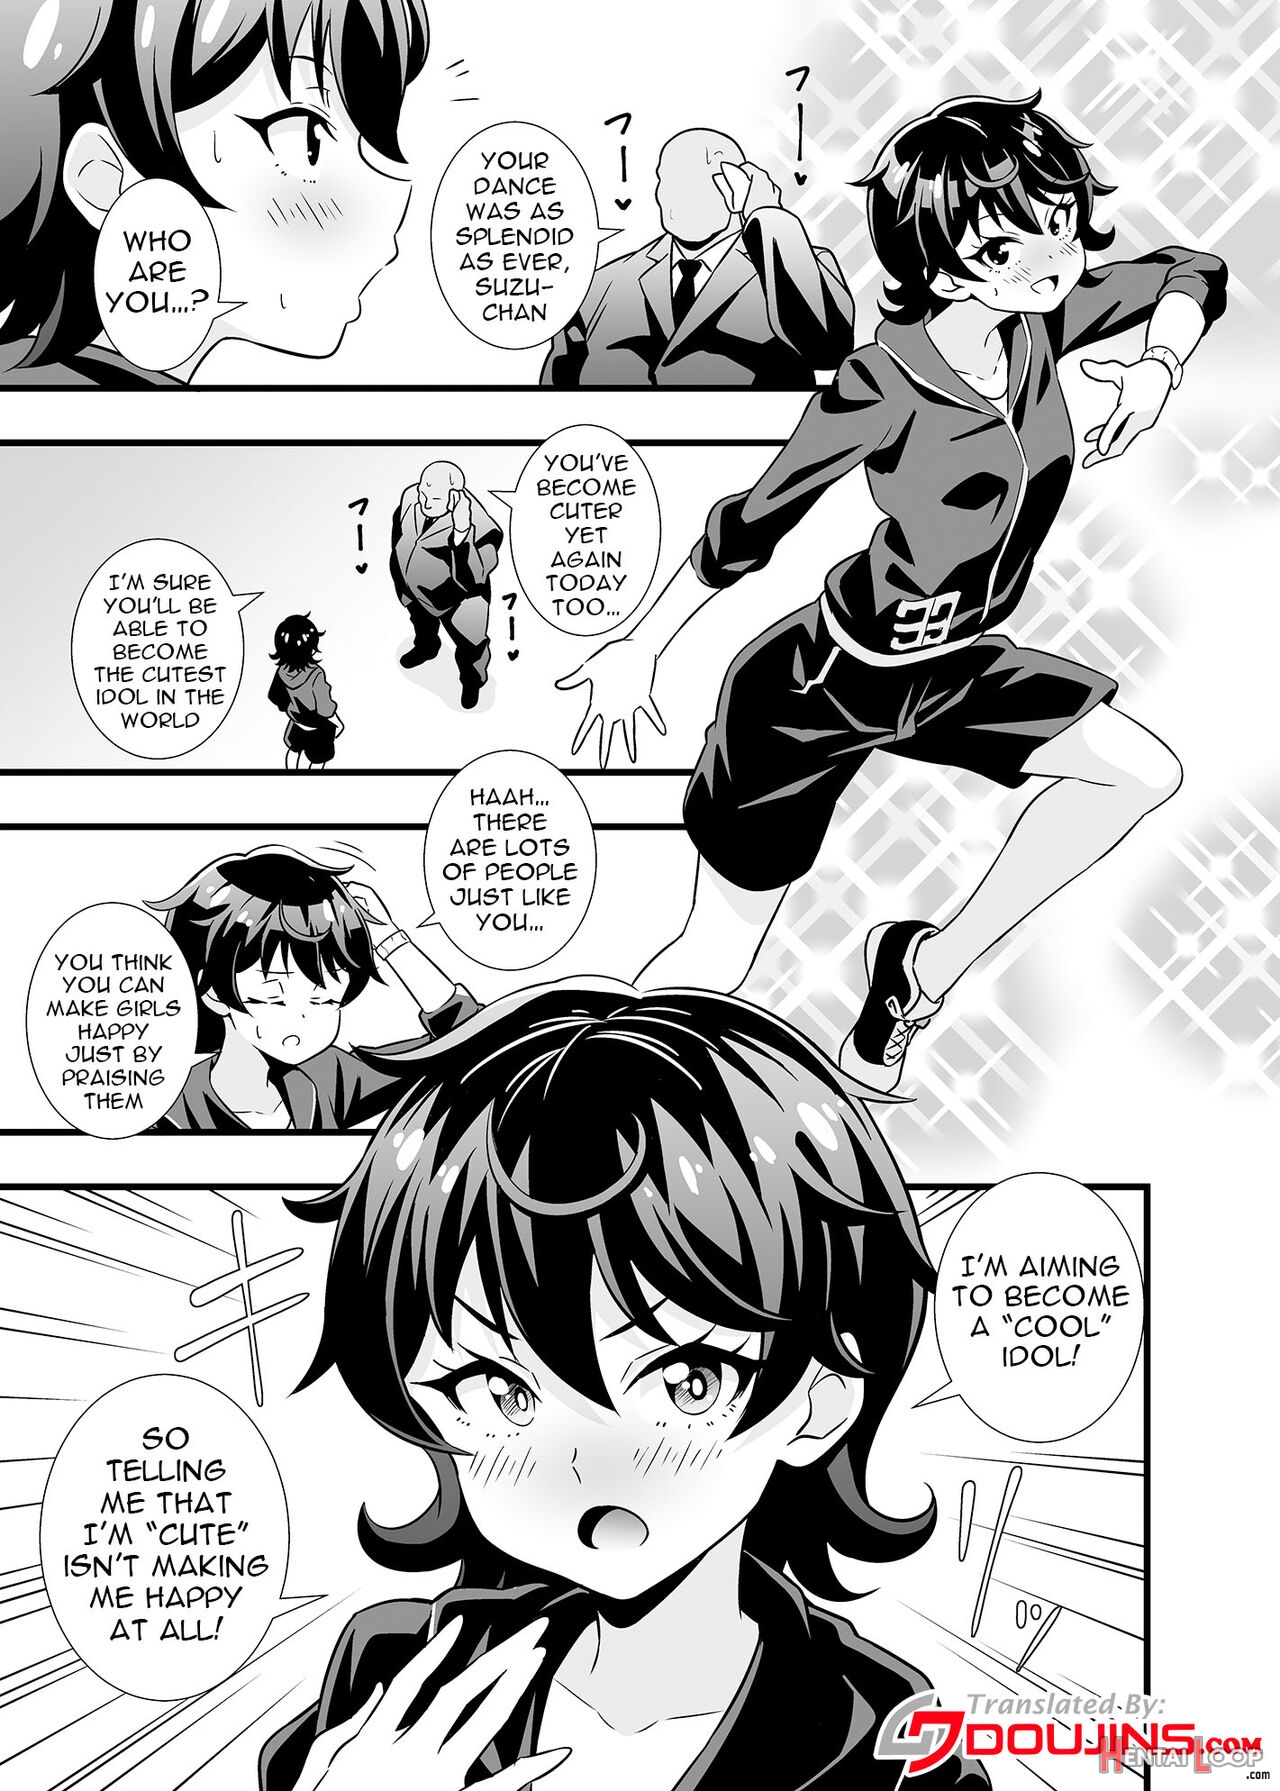 Suzu-chan's So Cute page 2